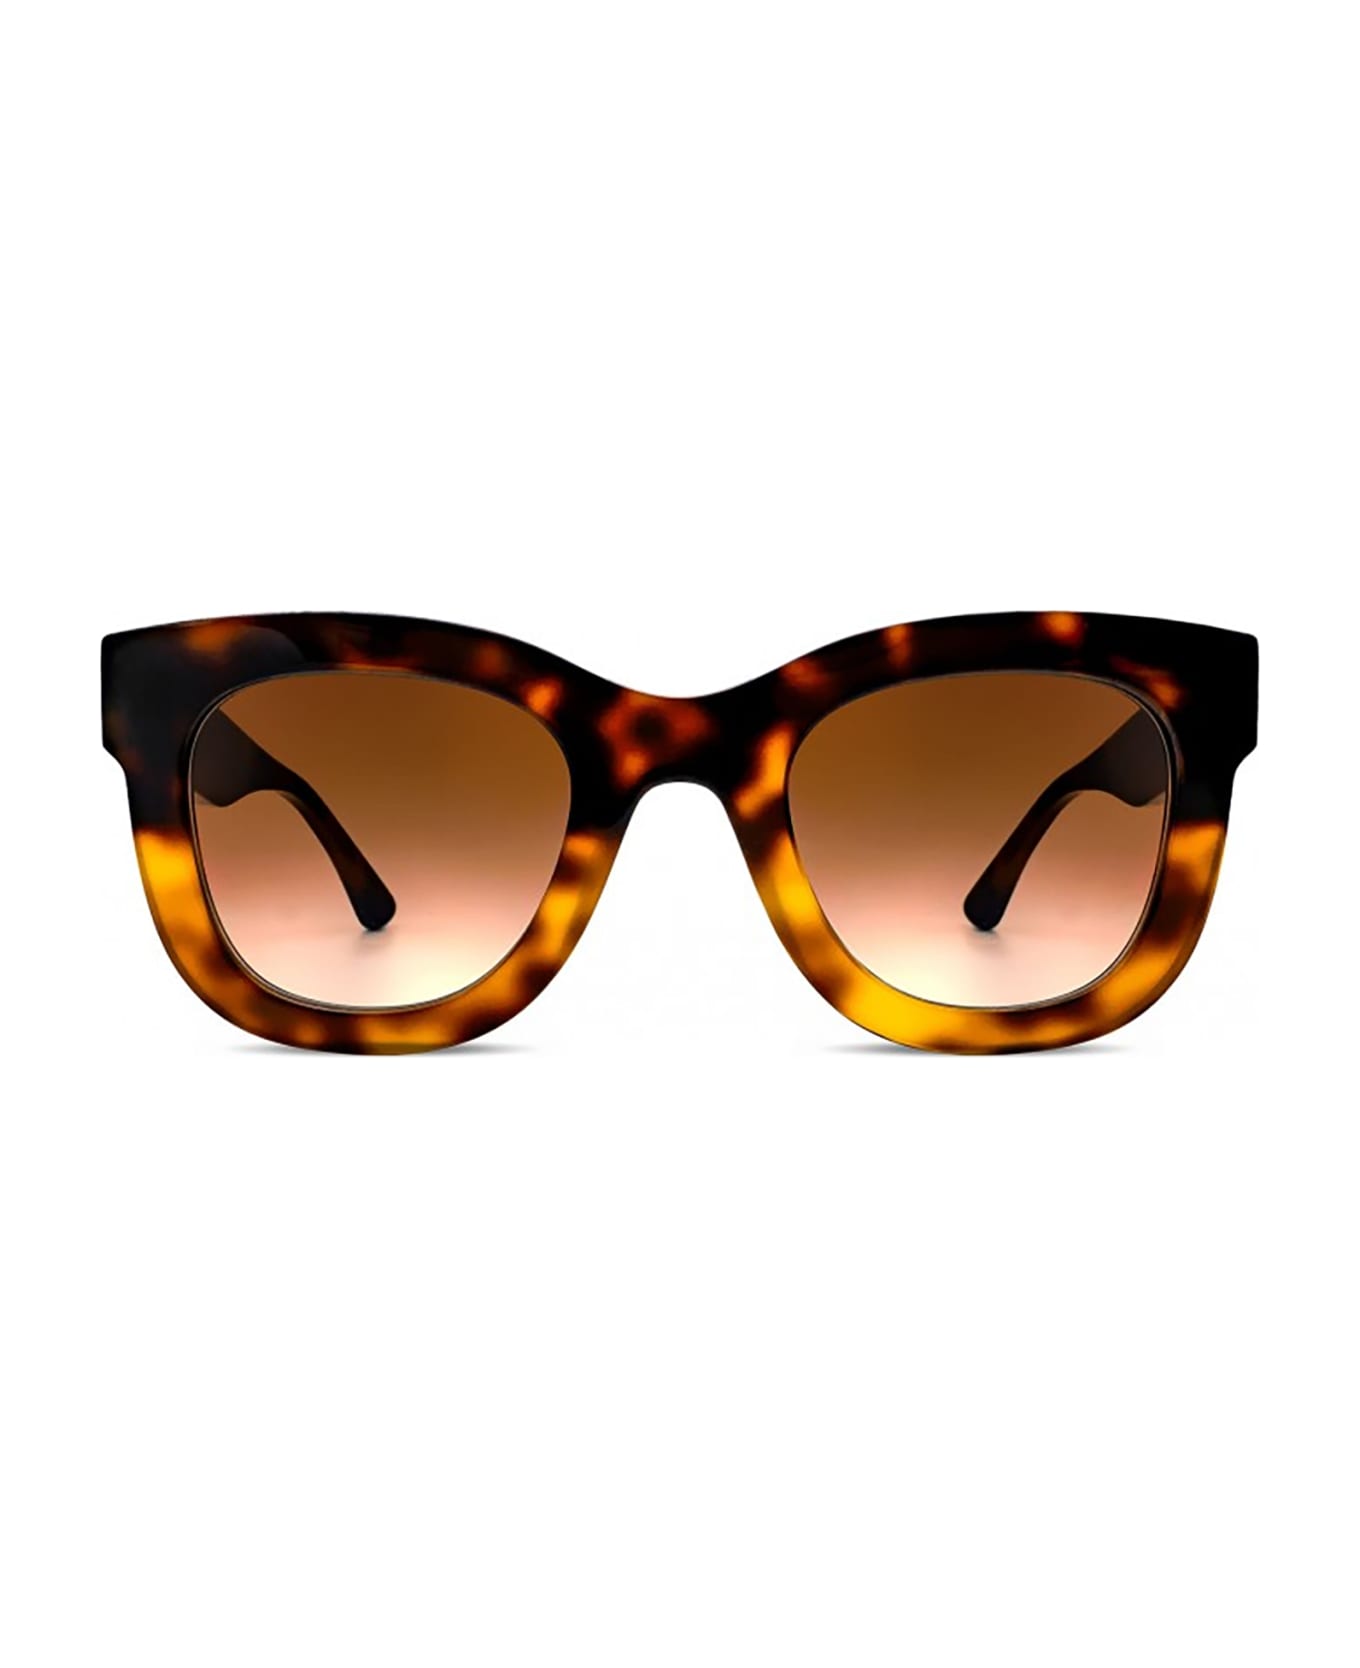 Thierry Lasry GAMBLY Sunglasses サングラス